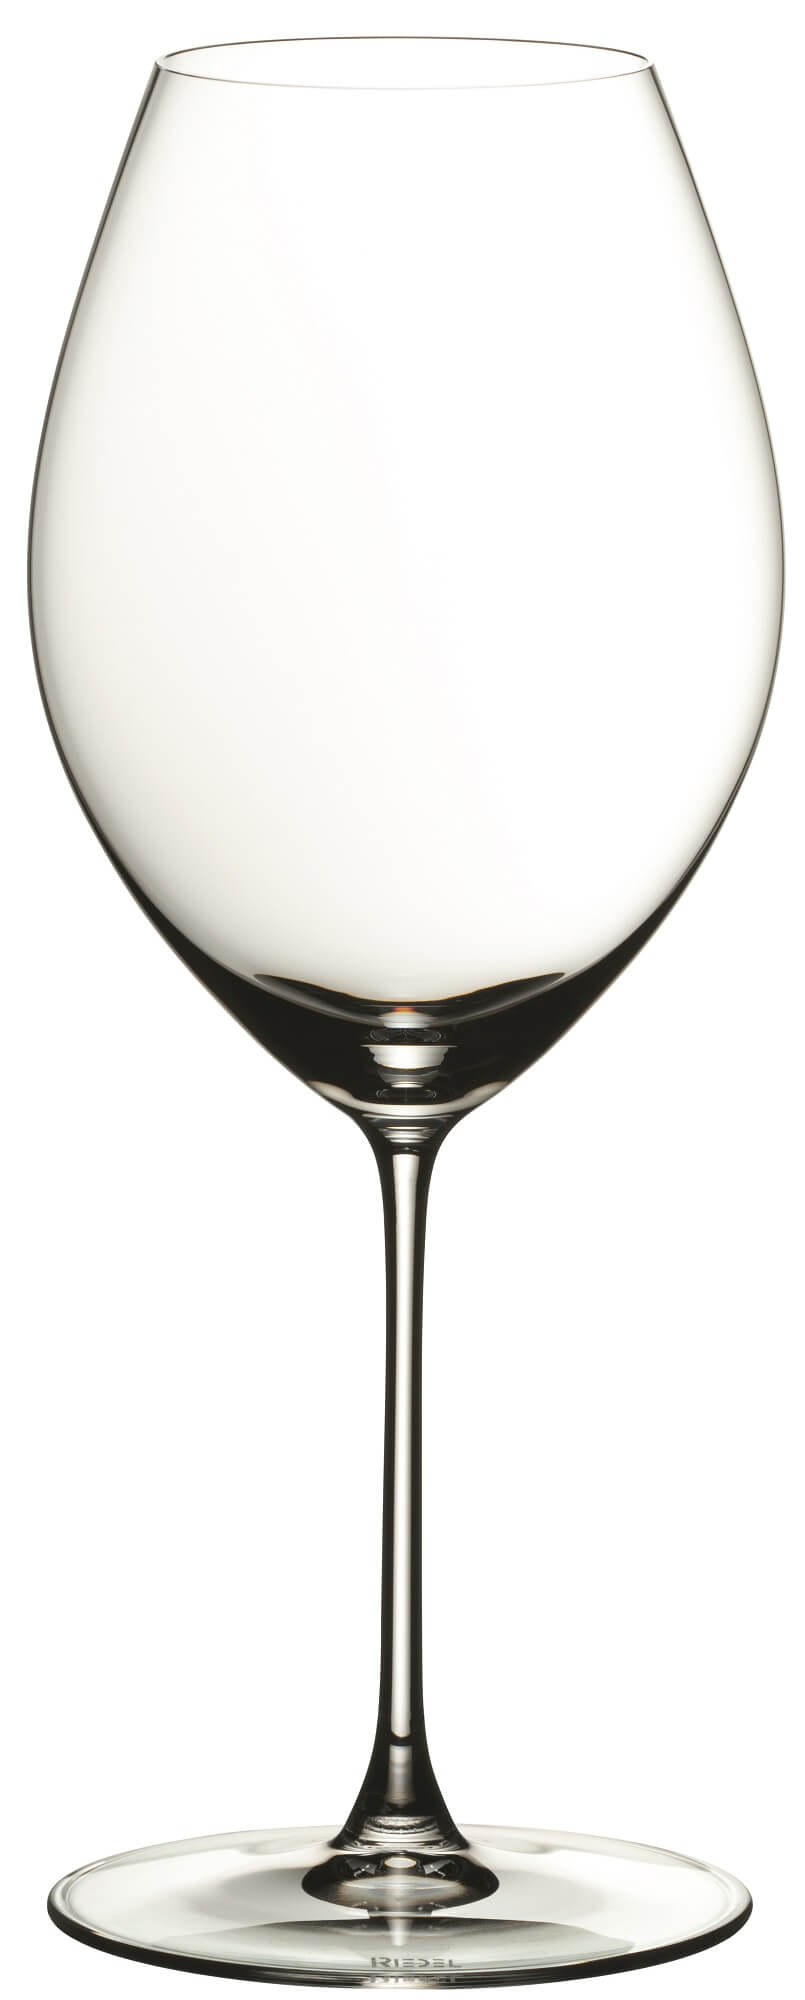 Alte Welt Syrah Glas Veritas, Riedel - 600ml (2 Stk.)